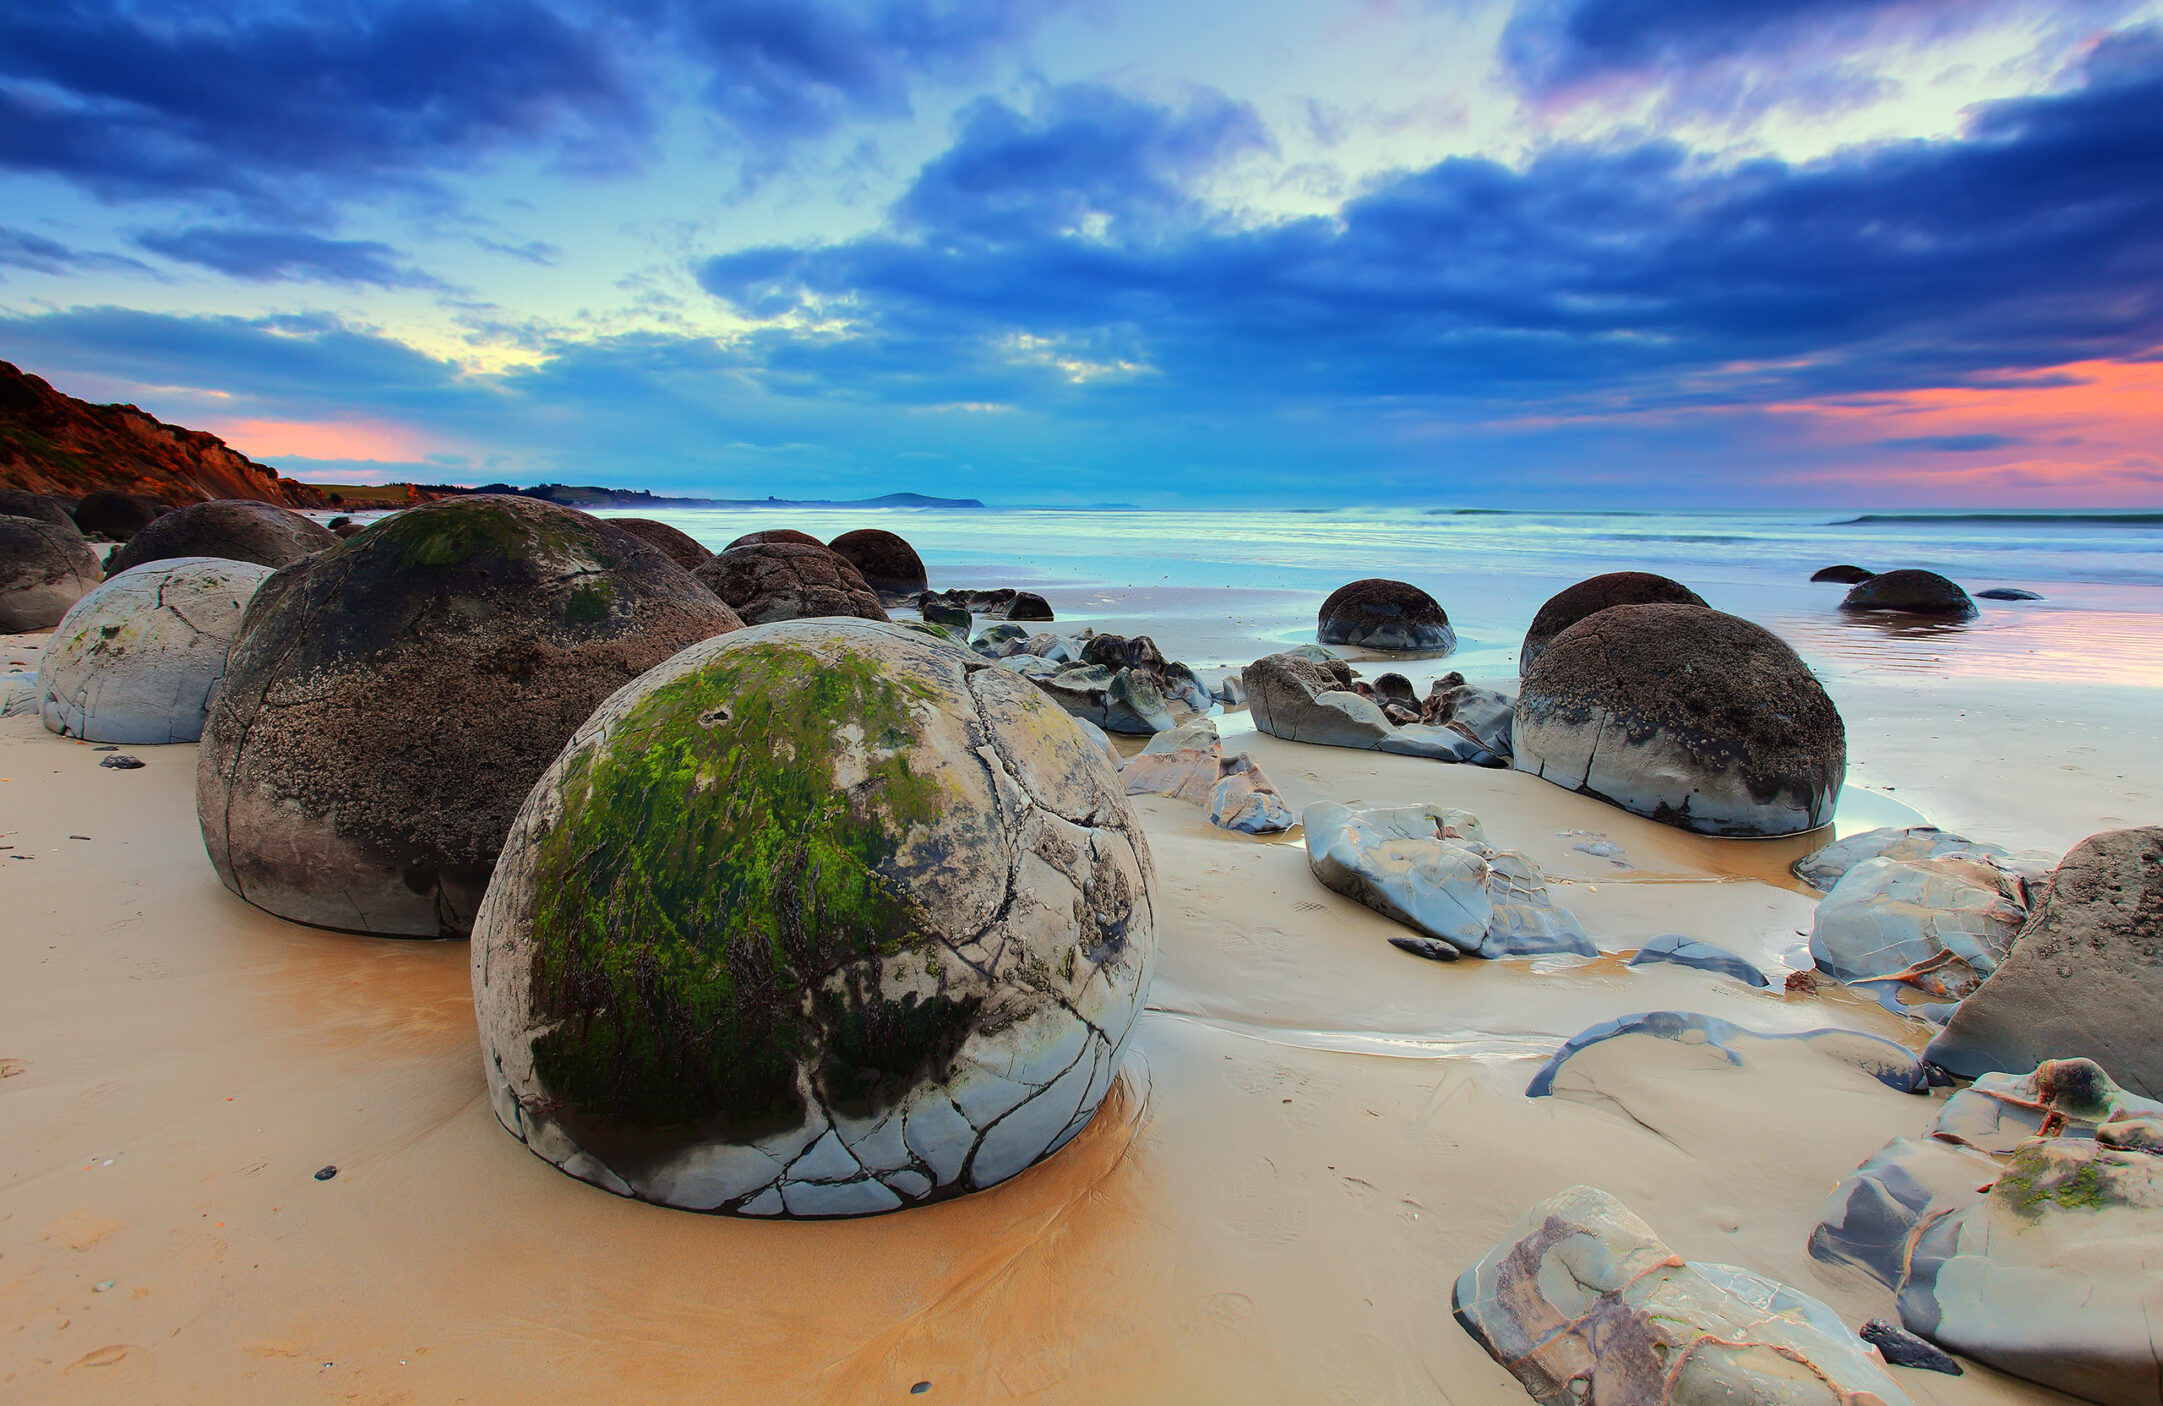 large rocks on sandy beach at sunrise